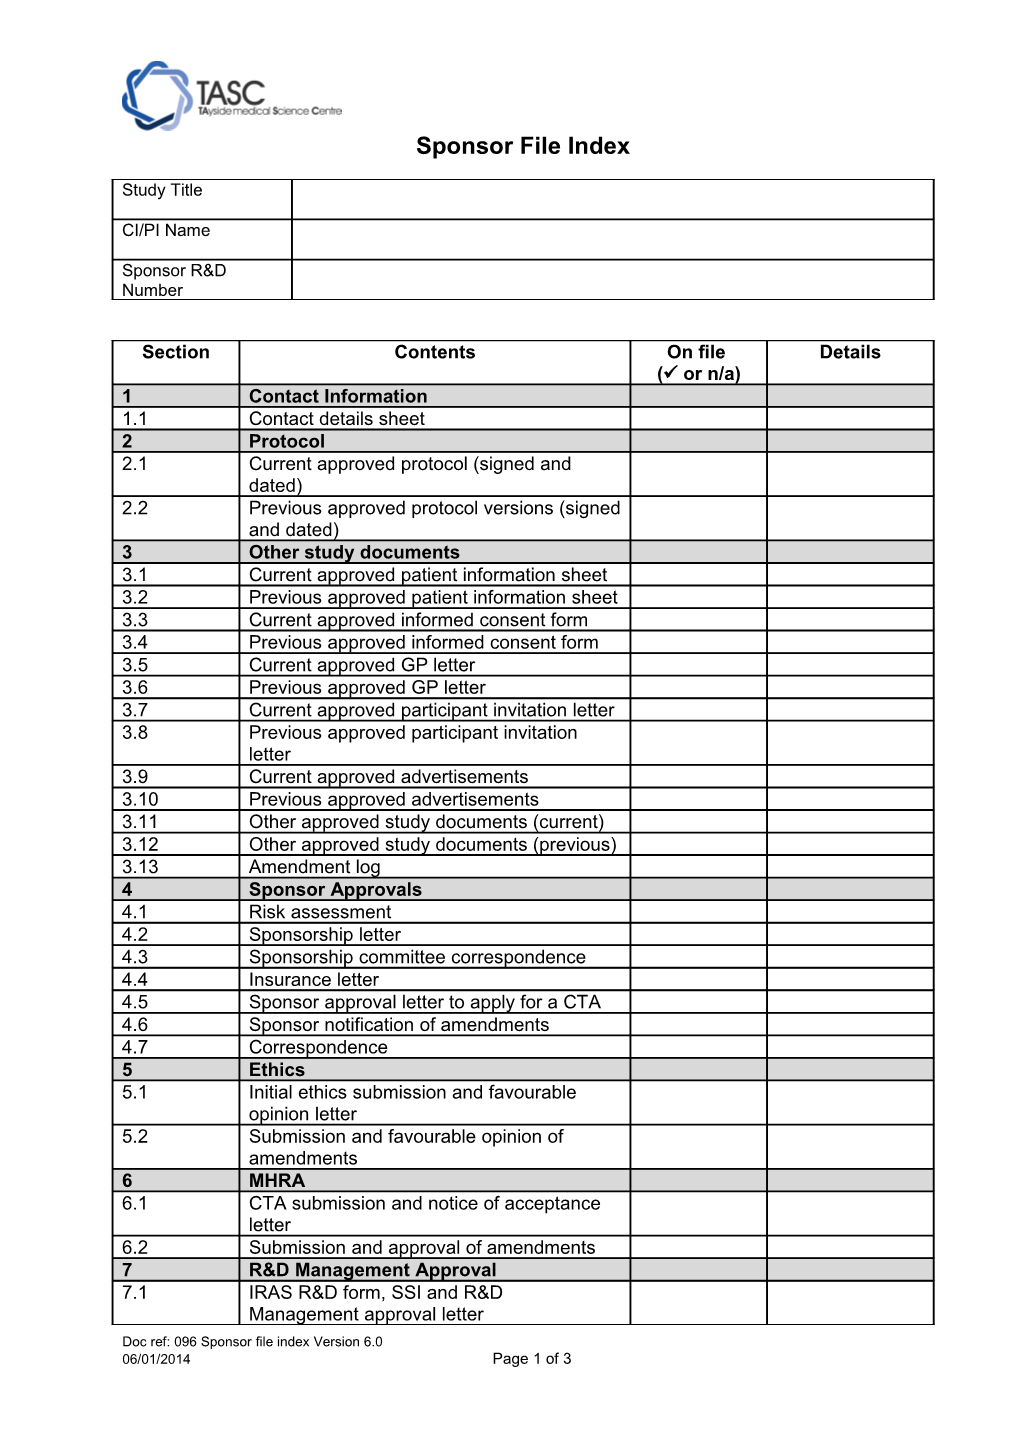 Sponsor File Checklist